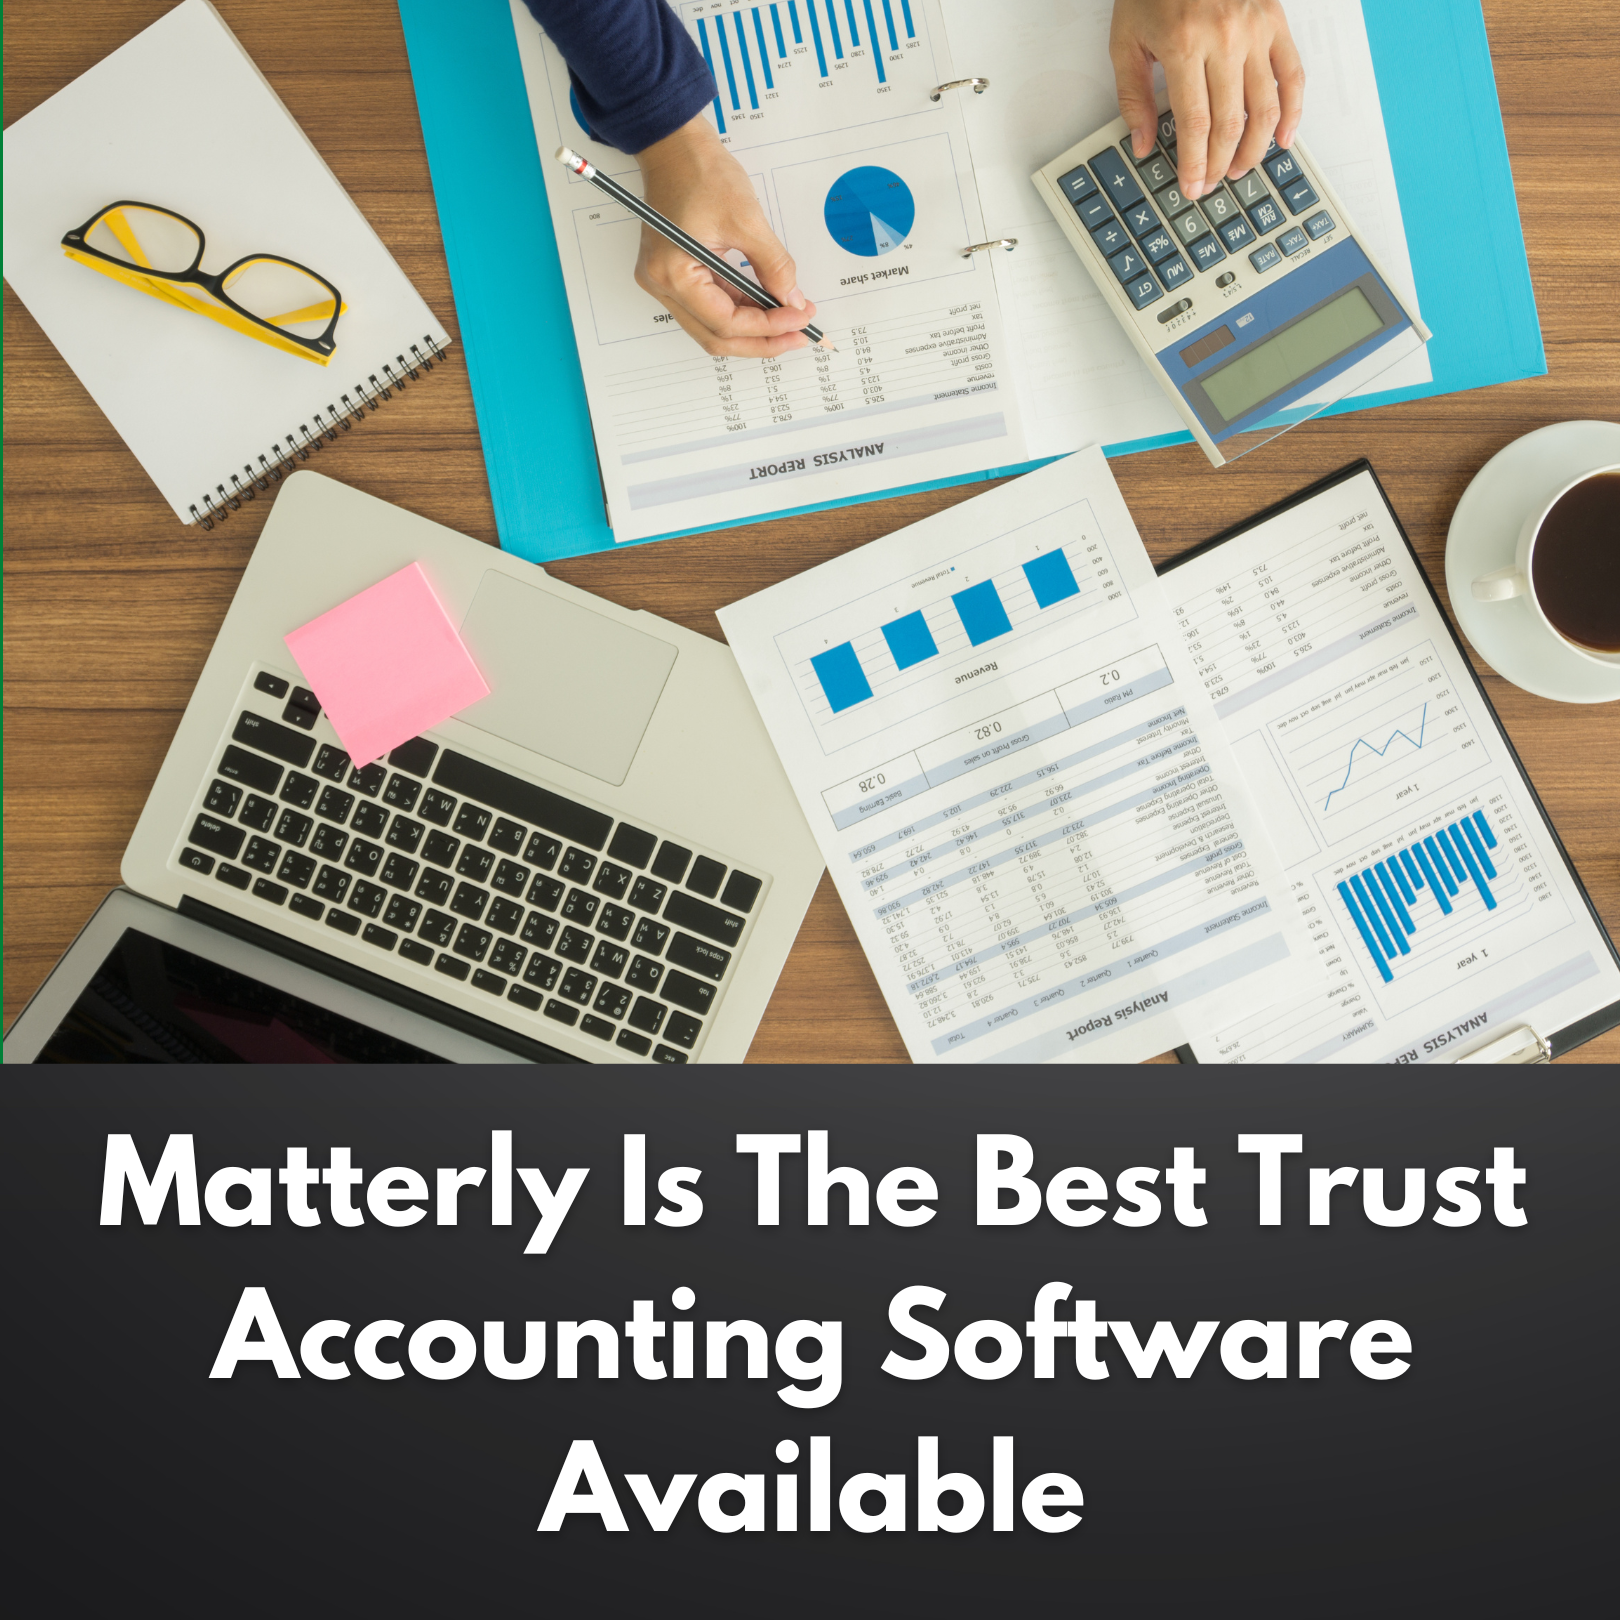 accounting software